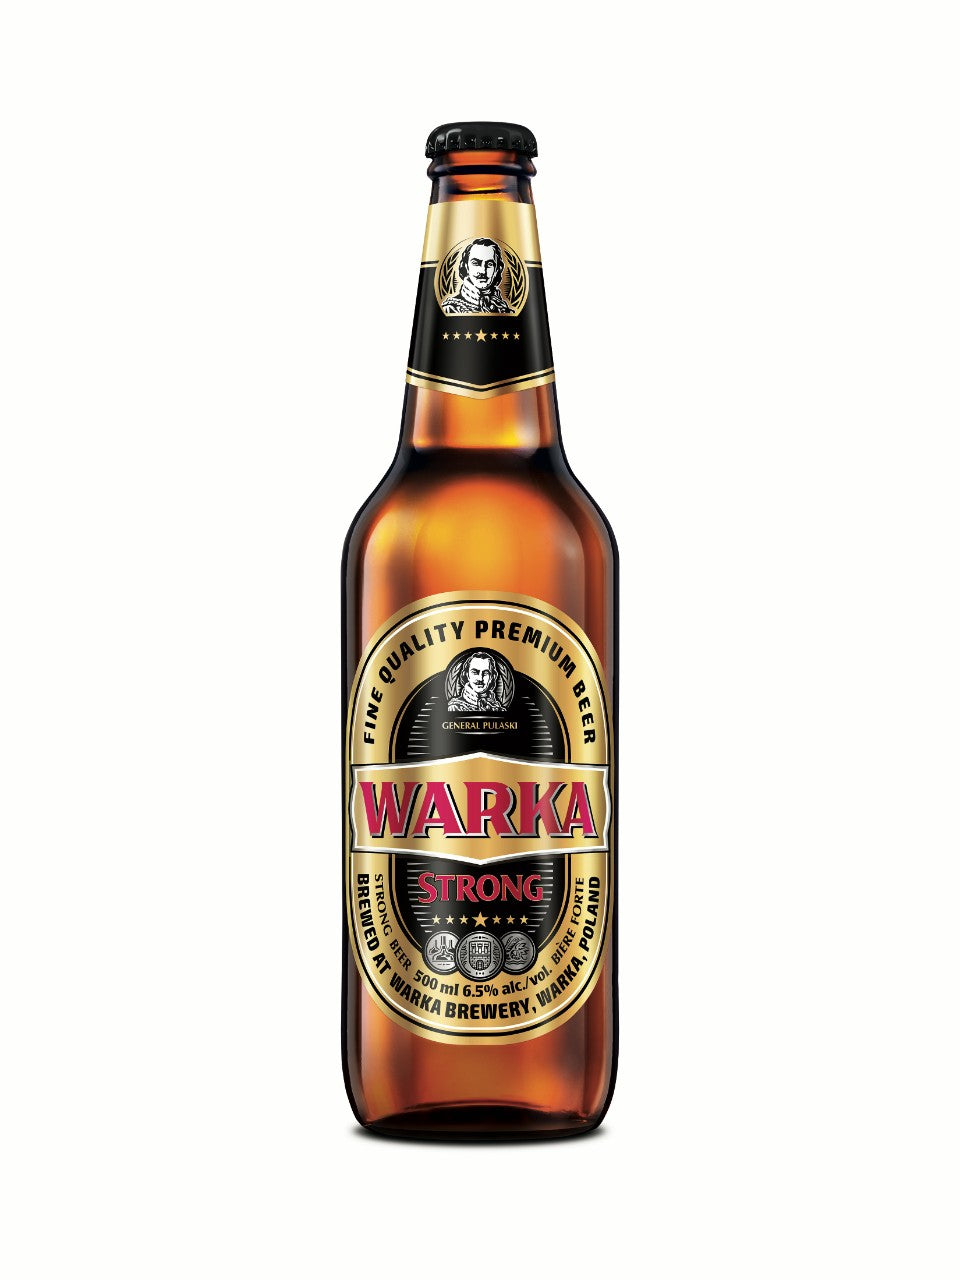 Warka Beer 500 mL bottle